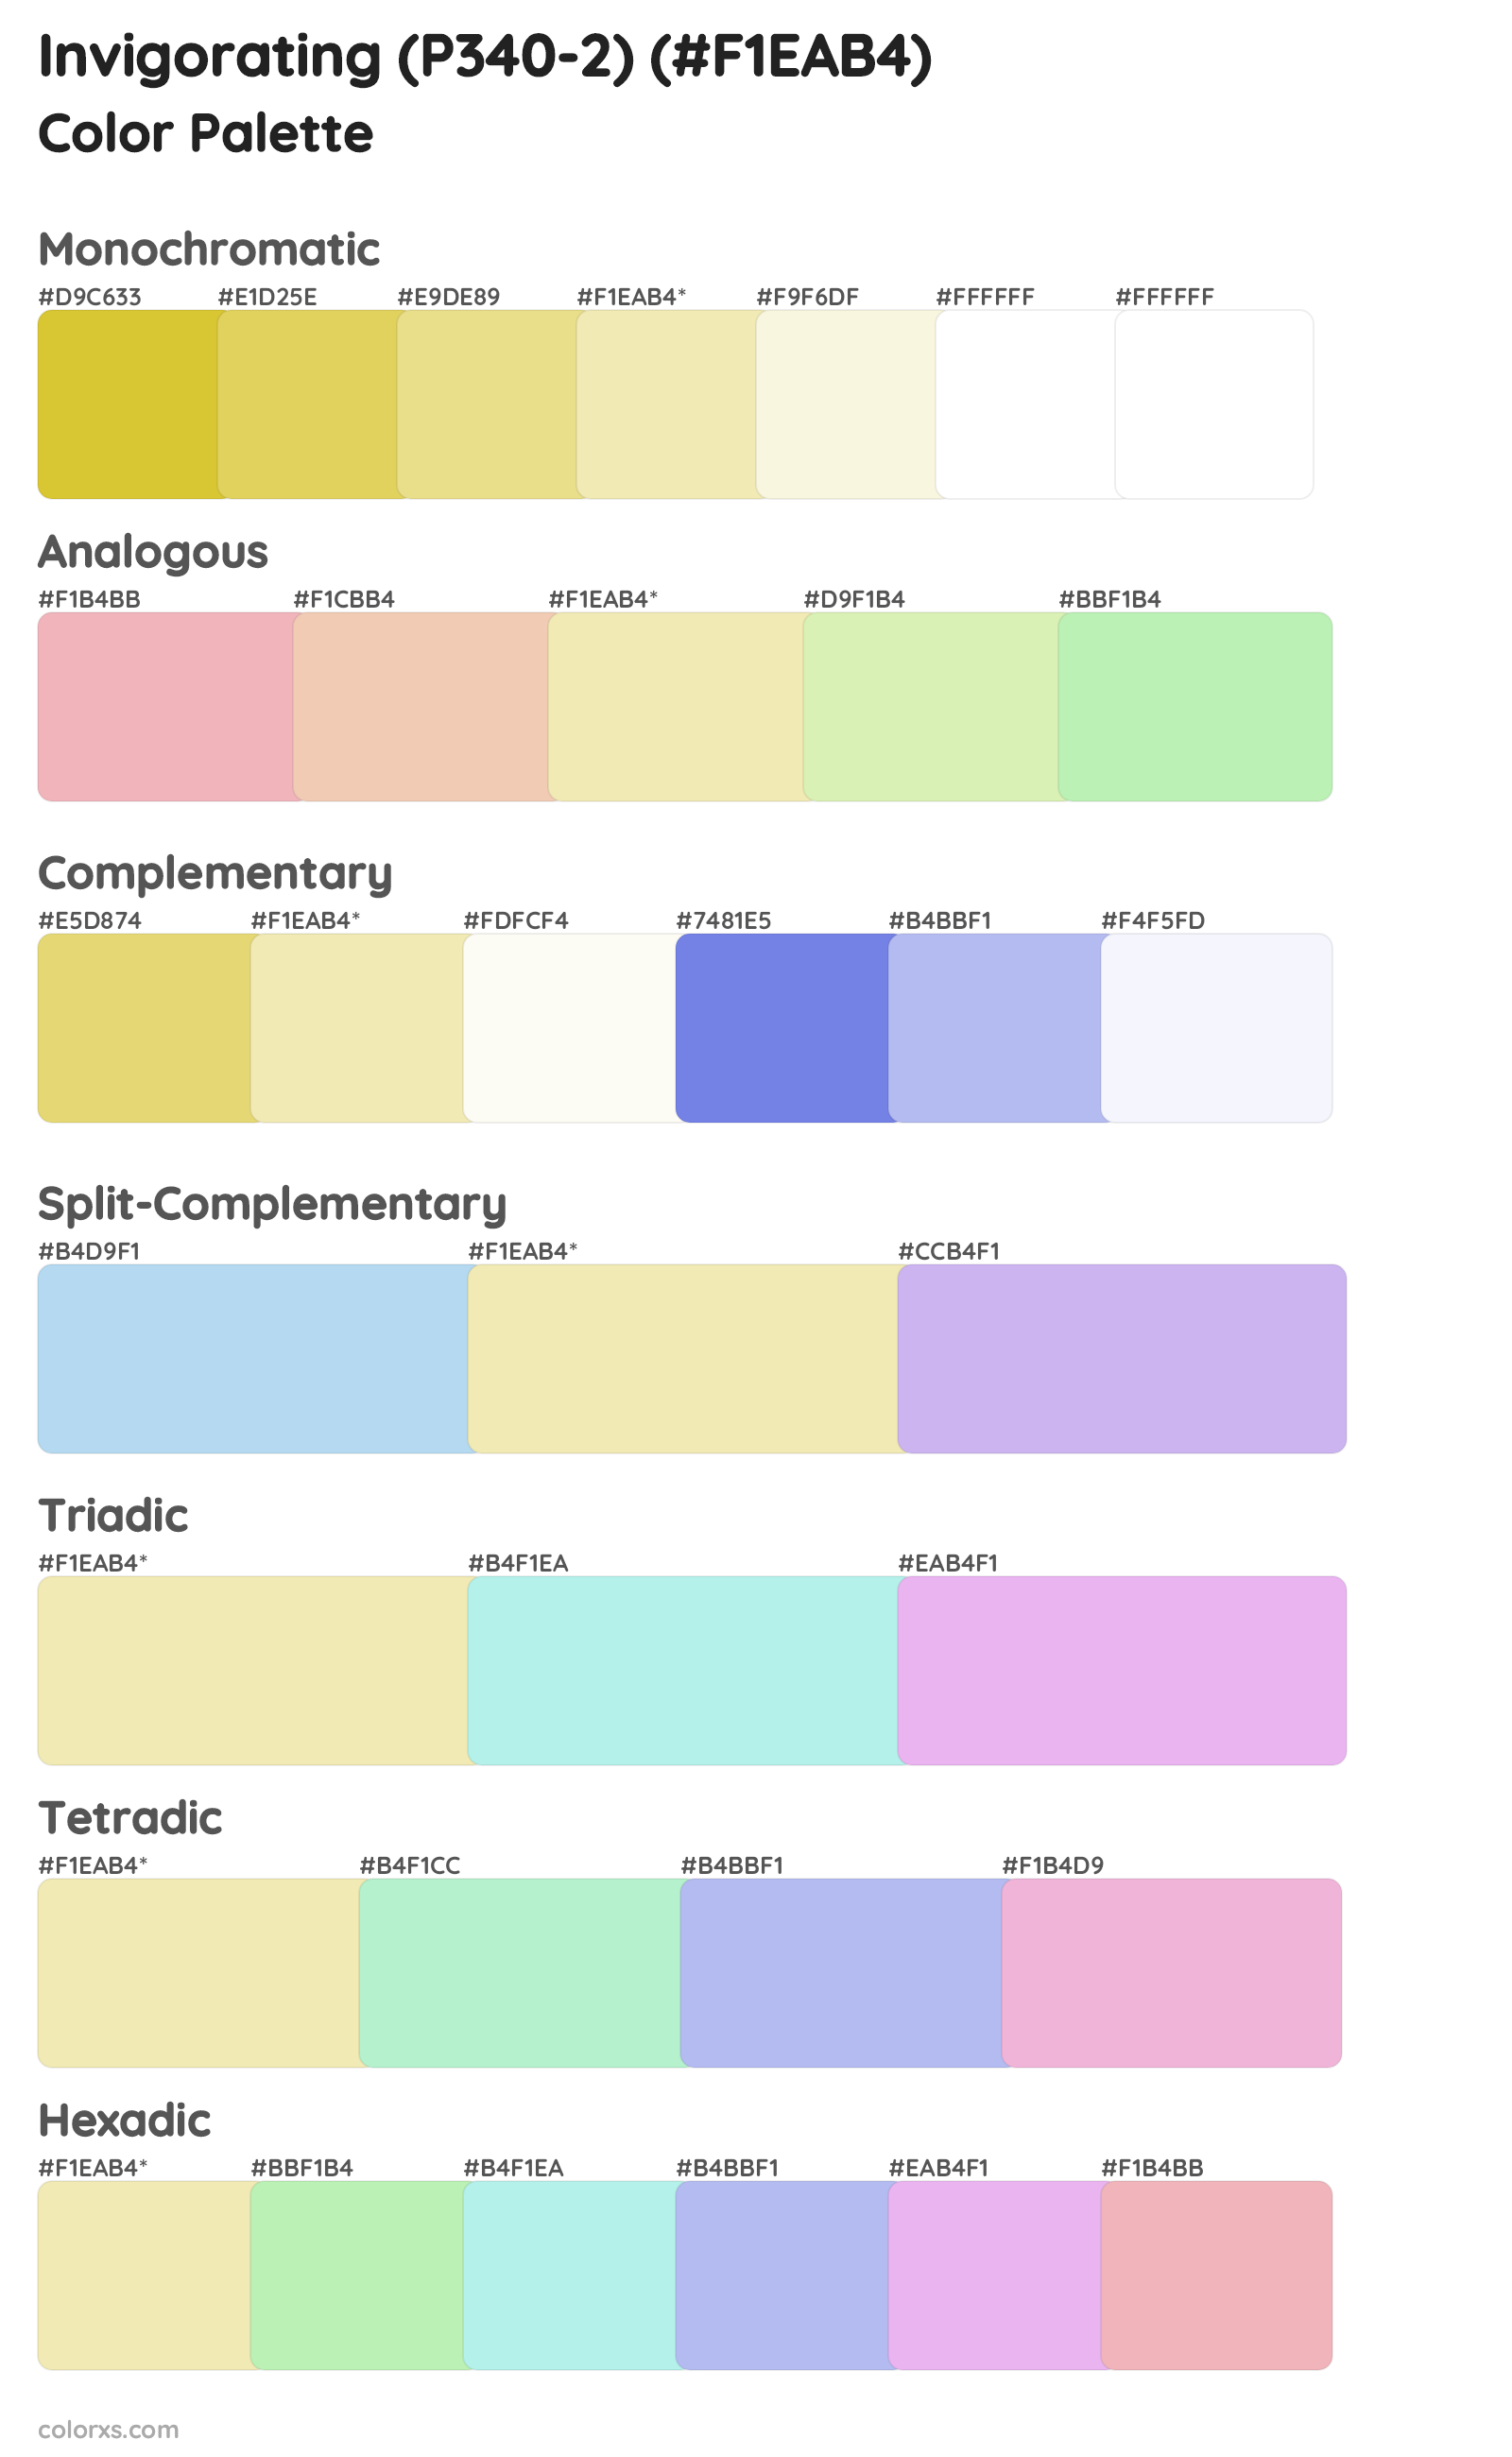 Invigorating (P340-2) Color Scheme Palettes